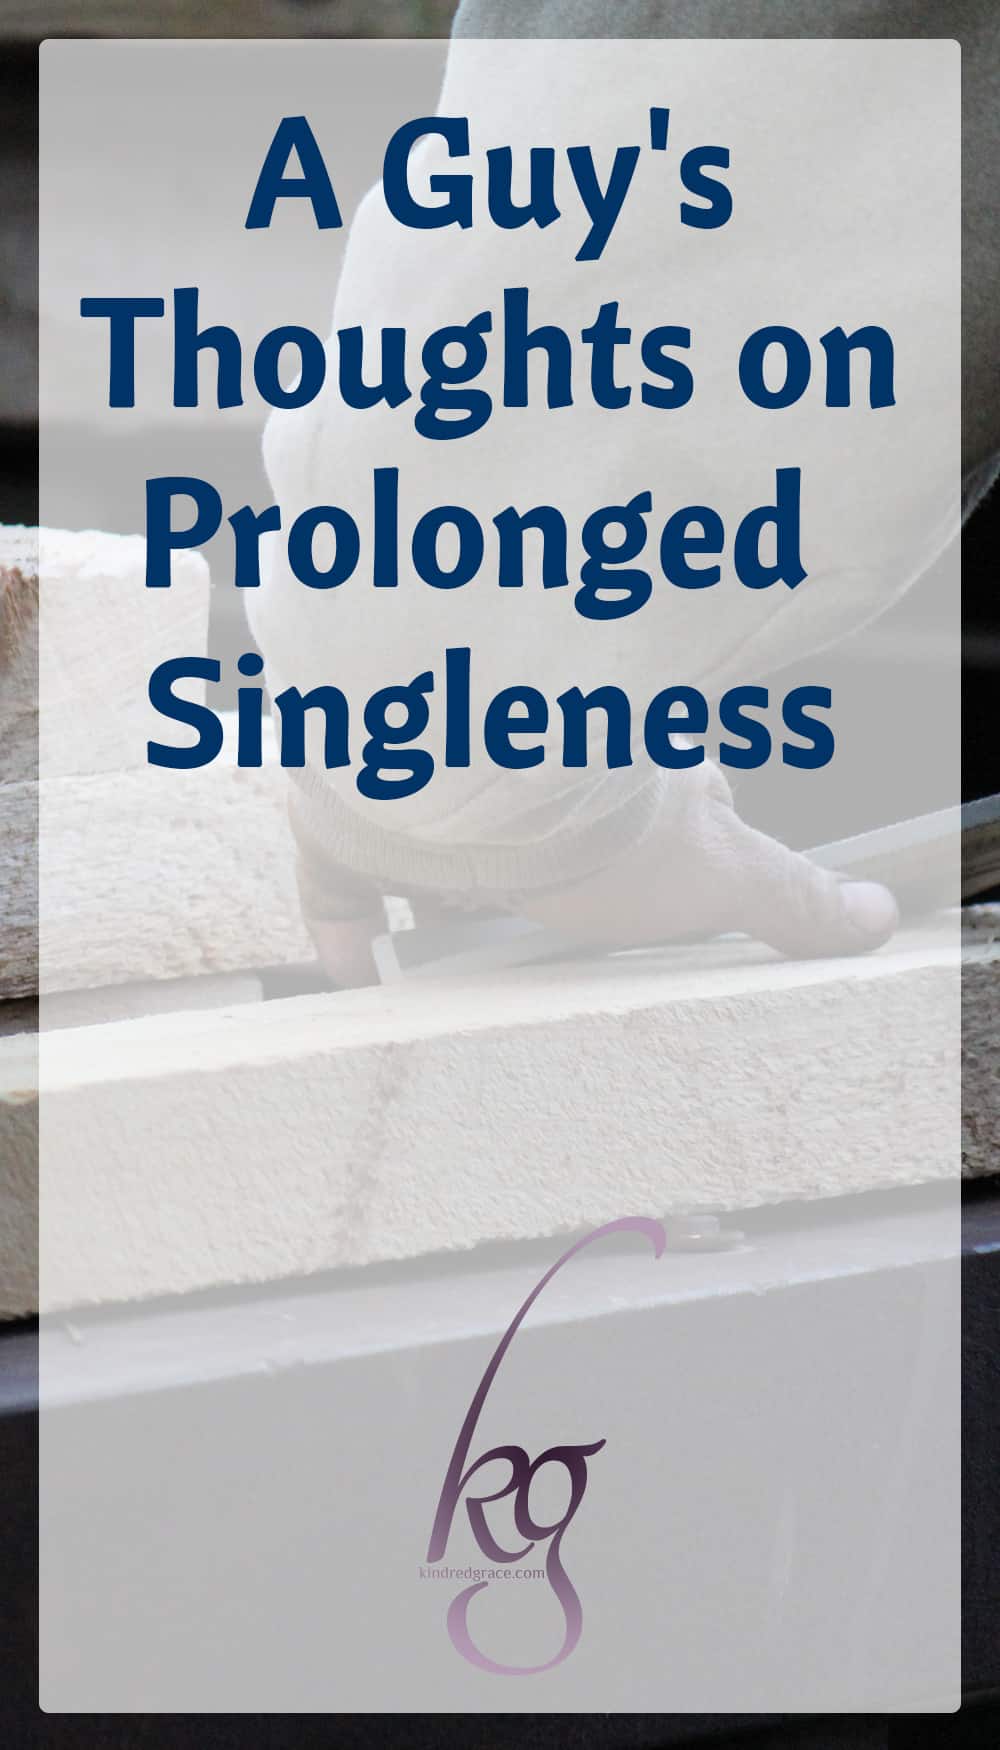 “I kept busy.” (A Guy’s Thoughts on Prolonged Singleness) via @KindredGrace